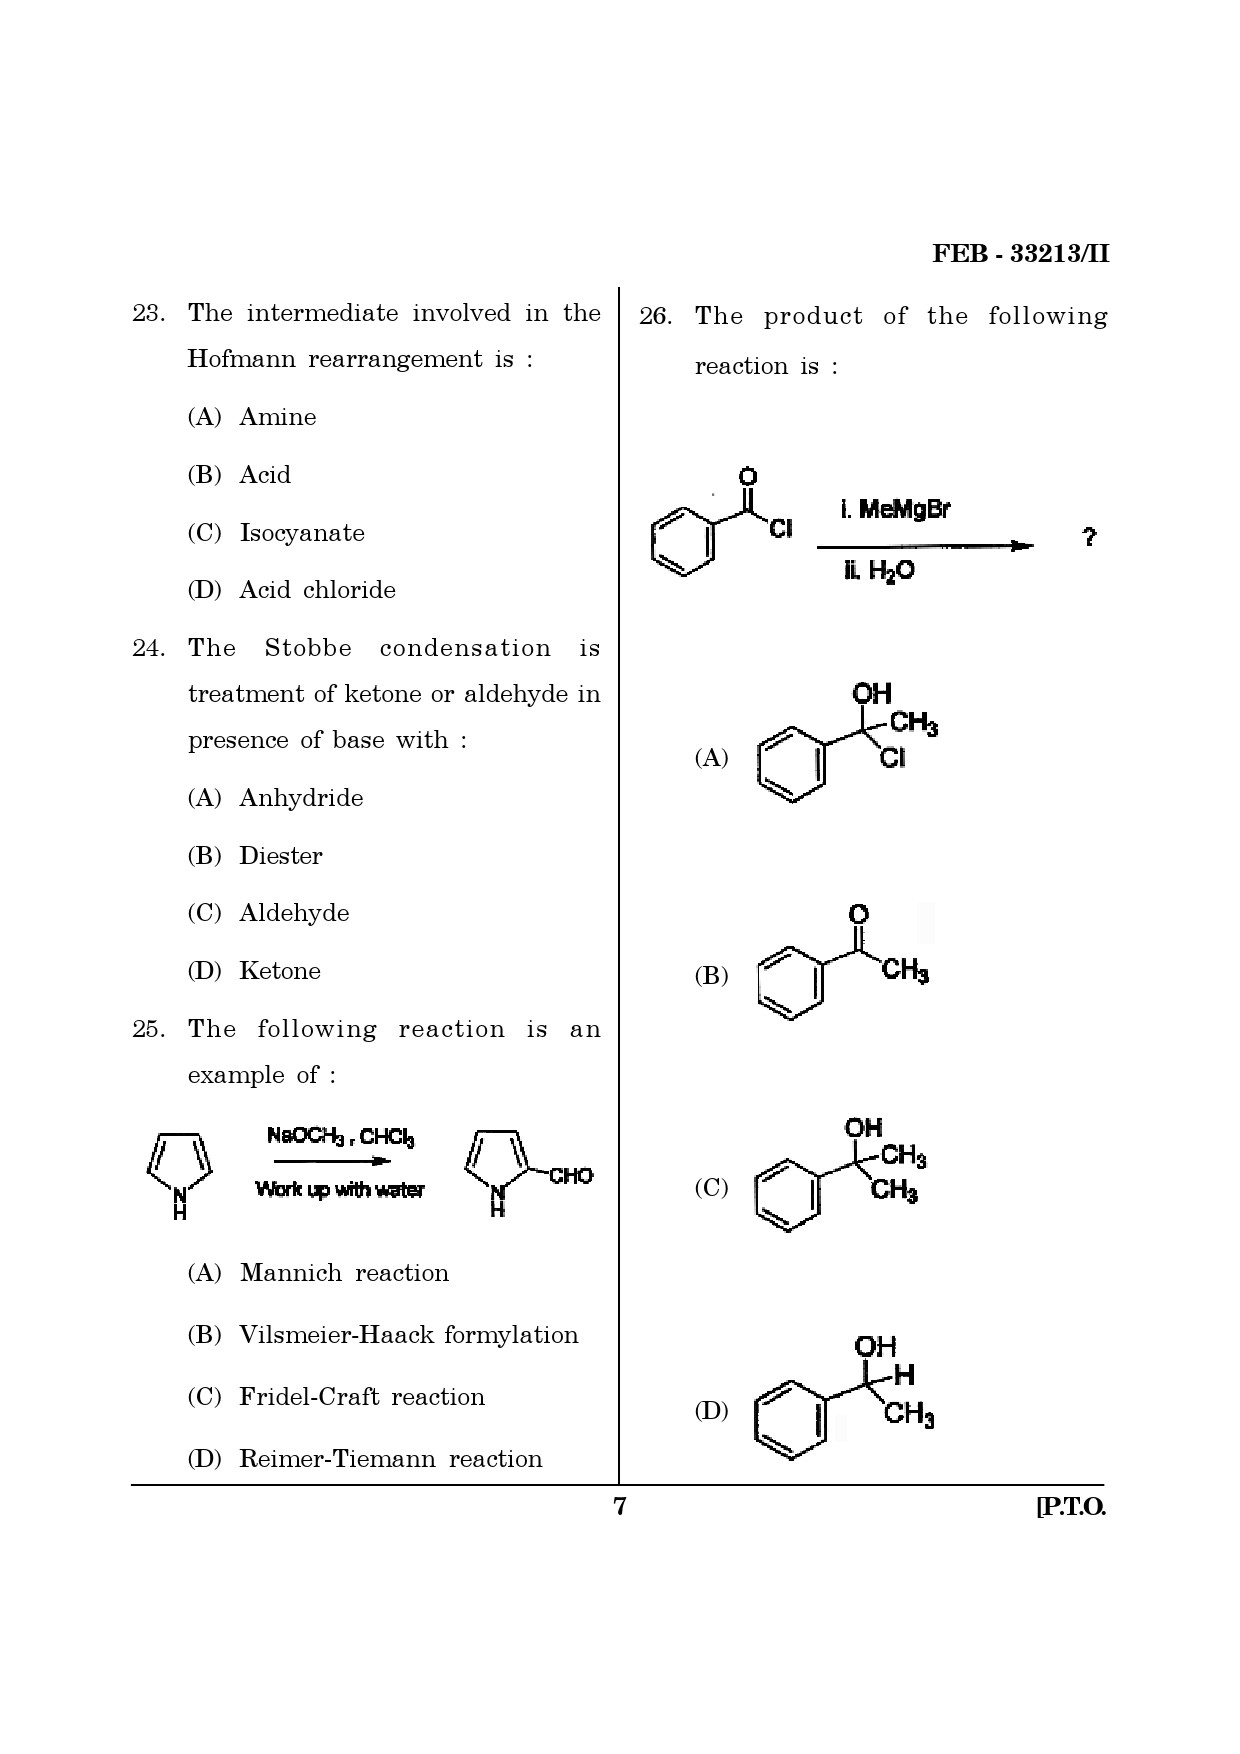 Maharashtra SET Chemical Sciences Question Paper II February 2013 7